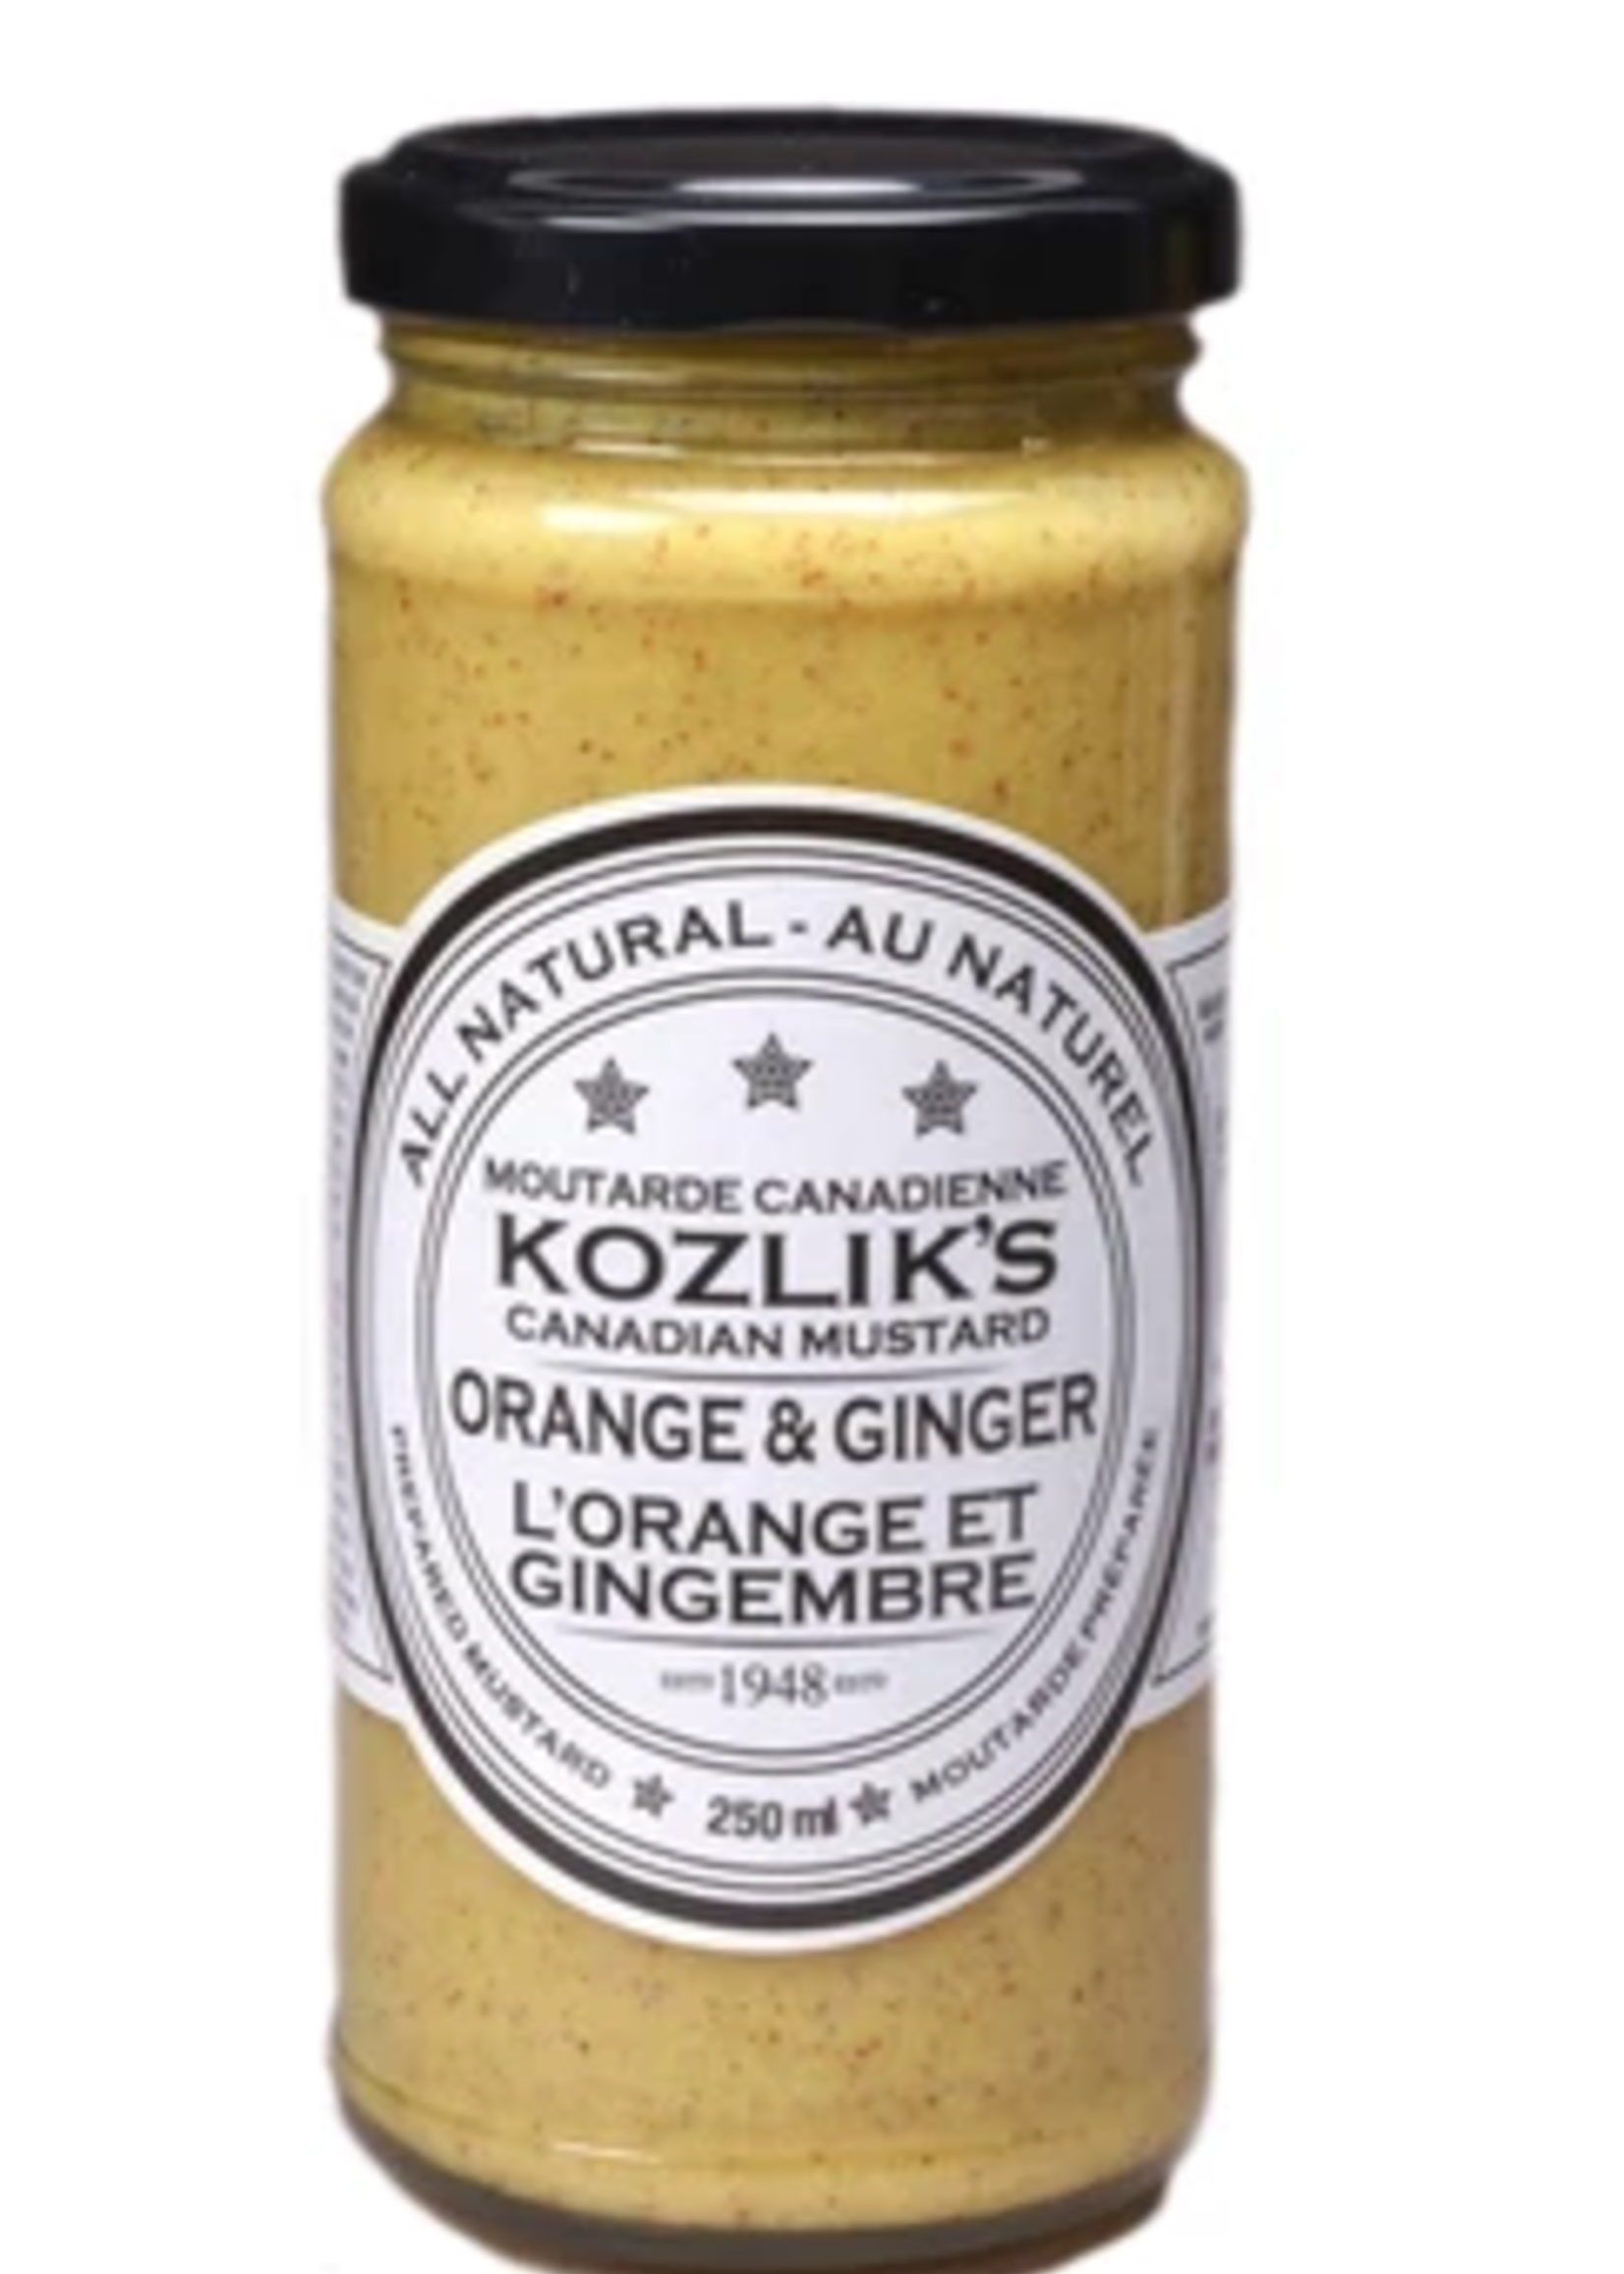 Kozlik's Orange and Ginger Mustard